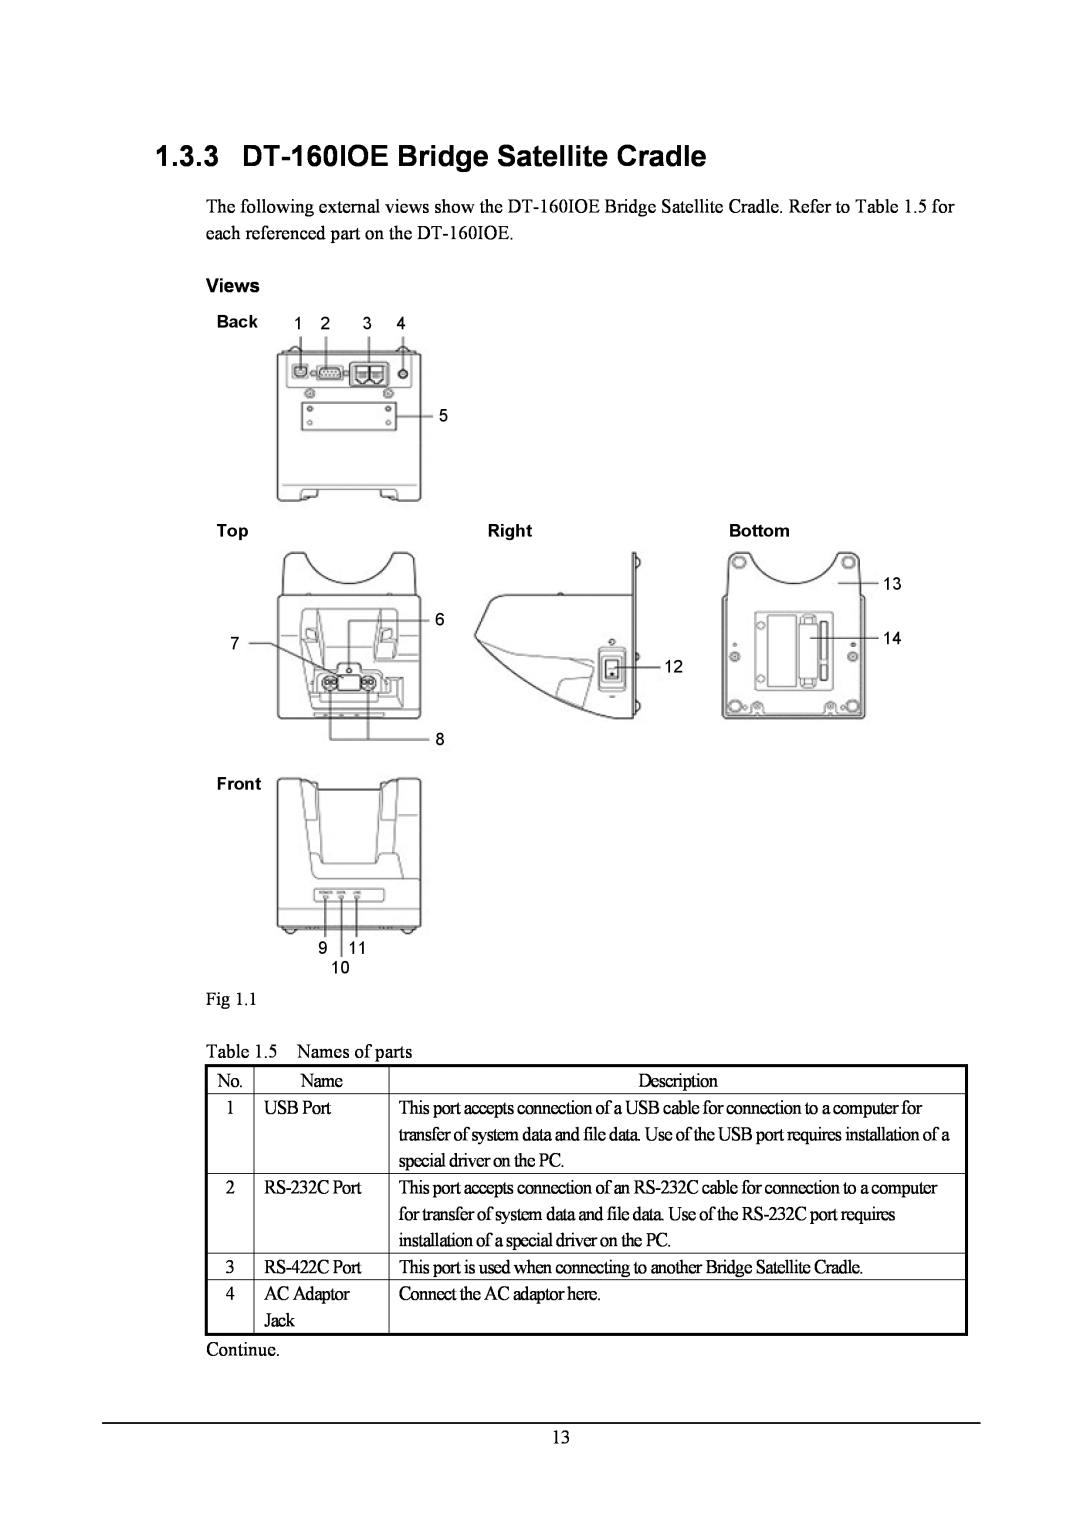 Casio DT-X11 Series, handheld terminals manual 1.3.3 DT-160IOE Bridge Satellite Cradle, Views, Back 1 2 3 